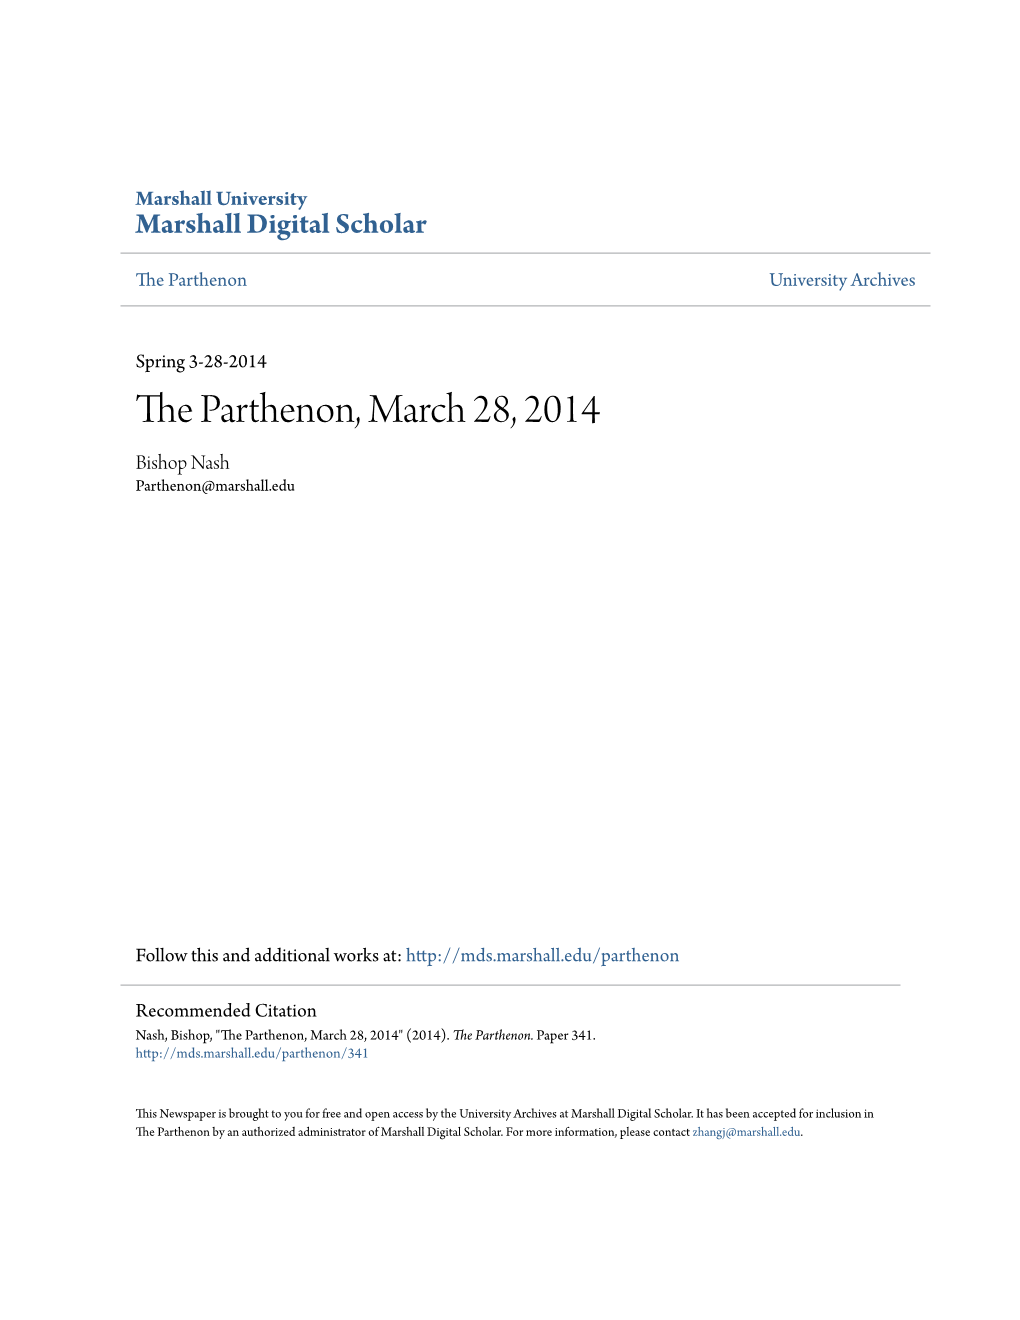 The Parthenon, March 28, 2014